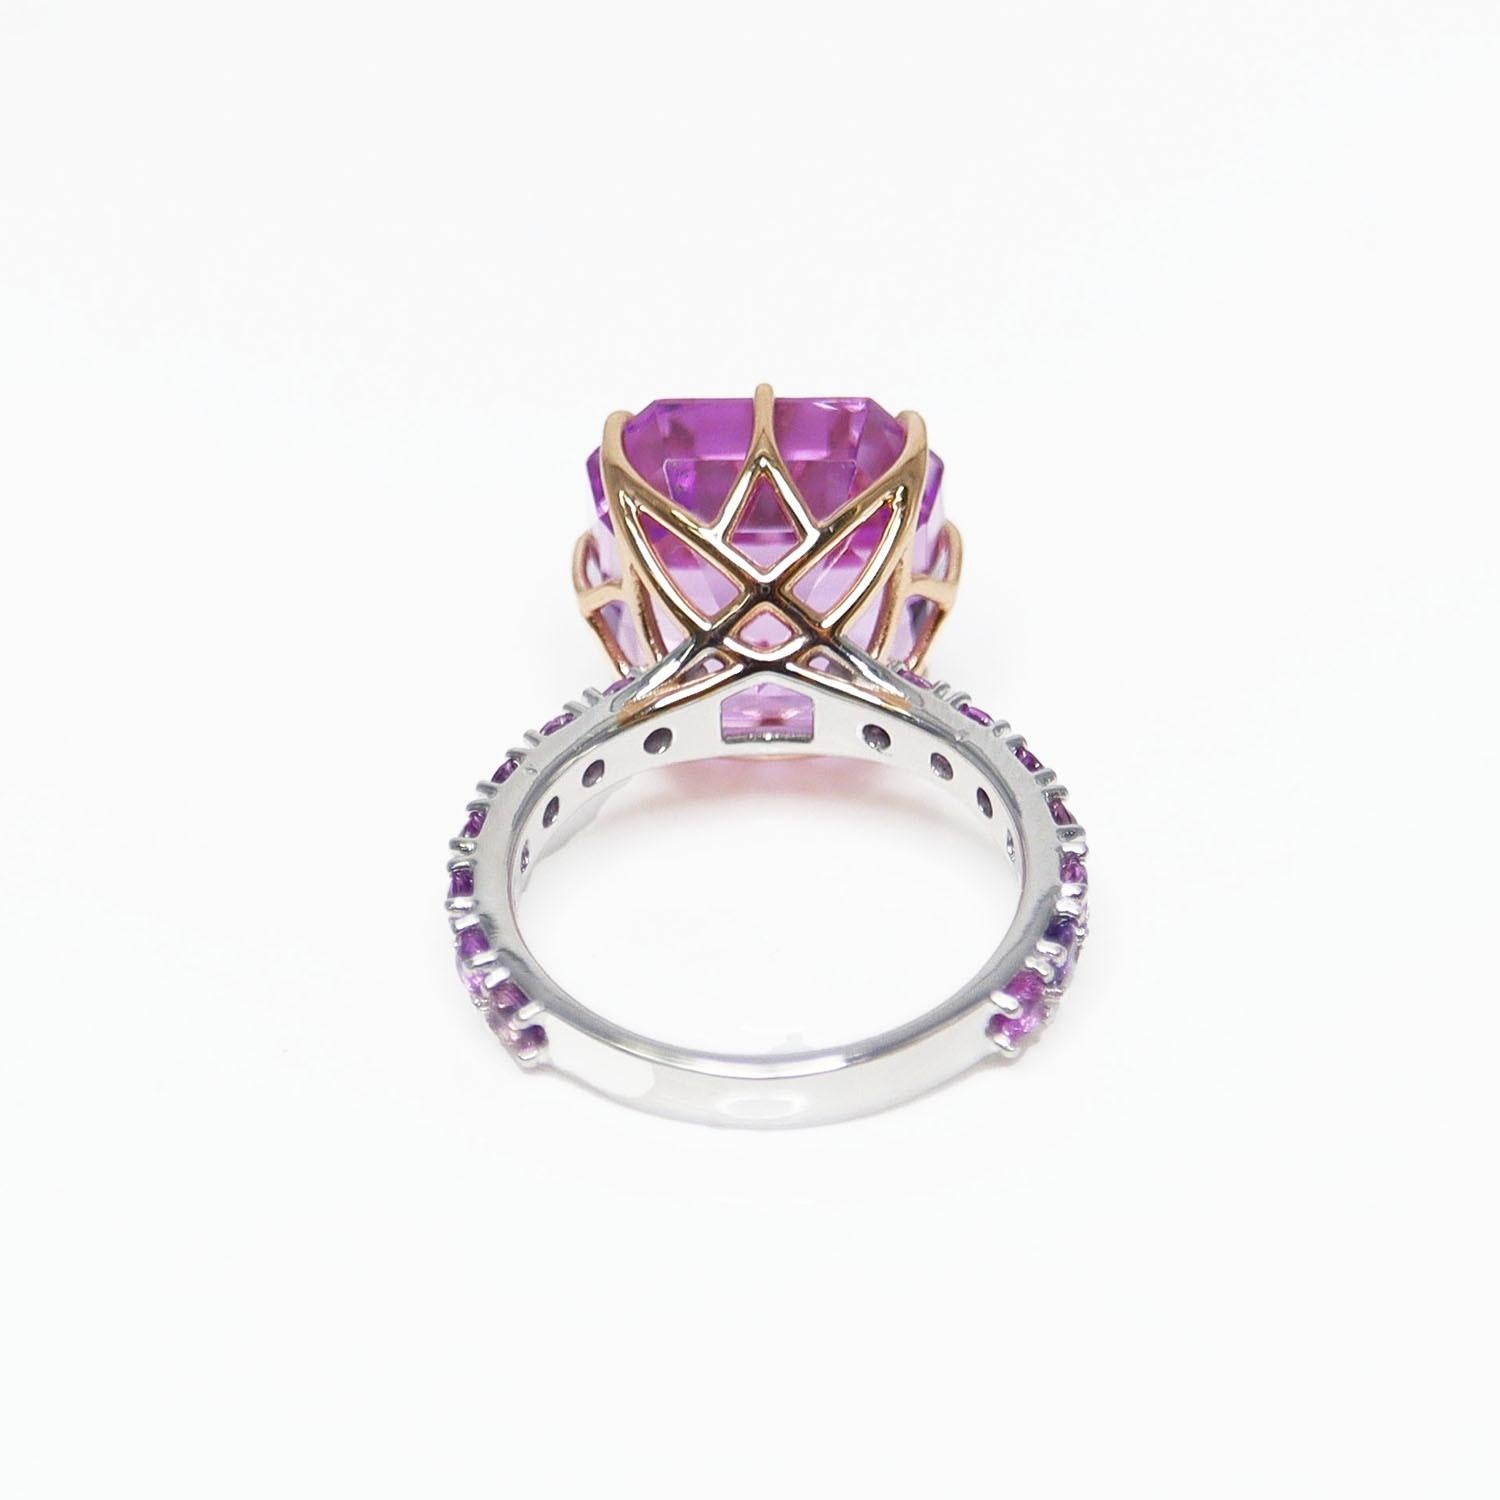 IGI 14K 14.45 Ct Kunzite&Pink Sapphires Antique Art Deco Style Engagement Ring 2